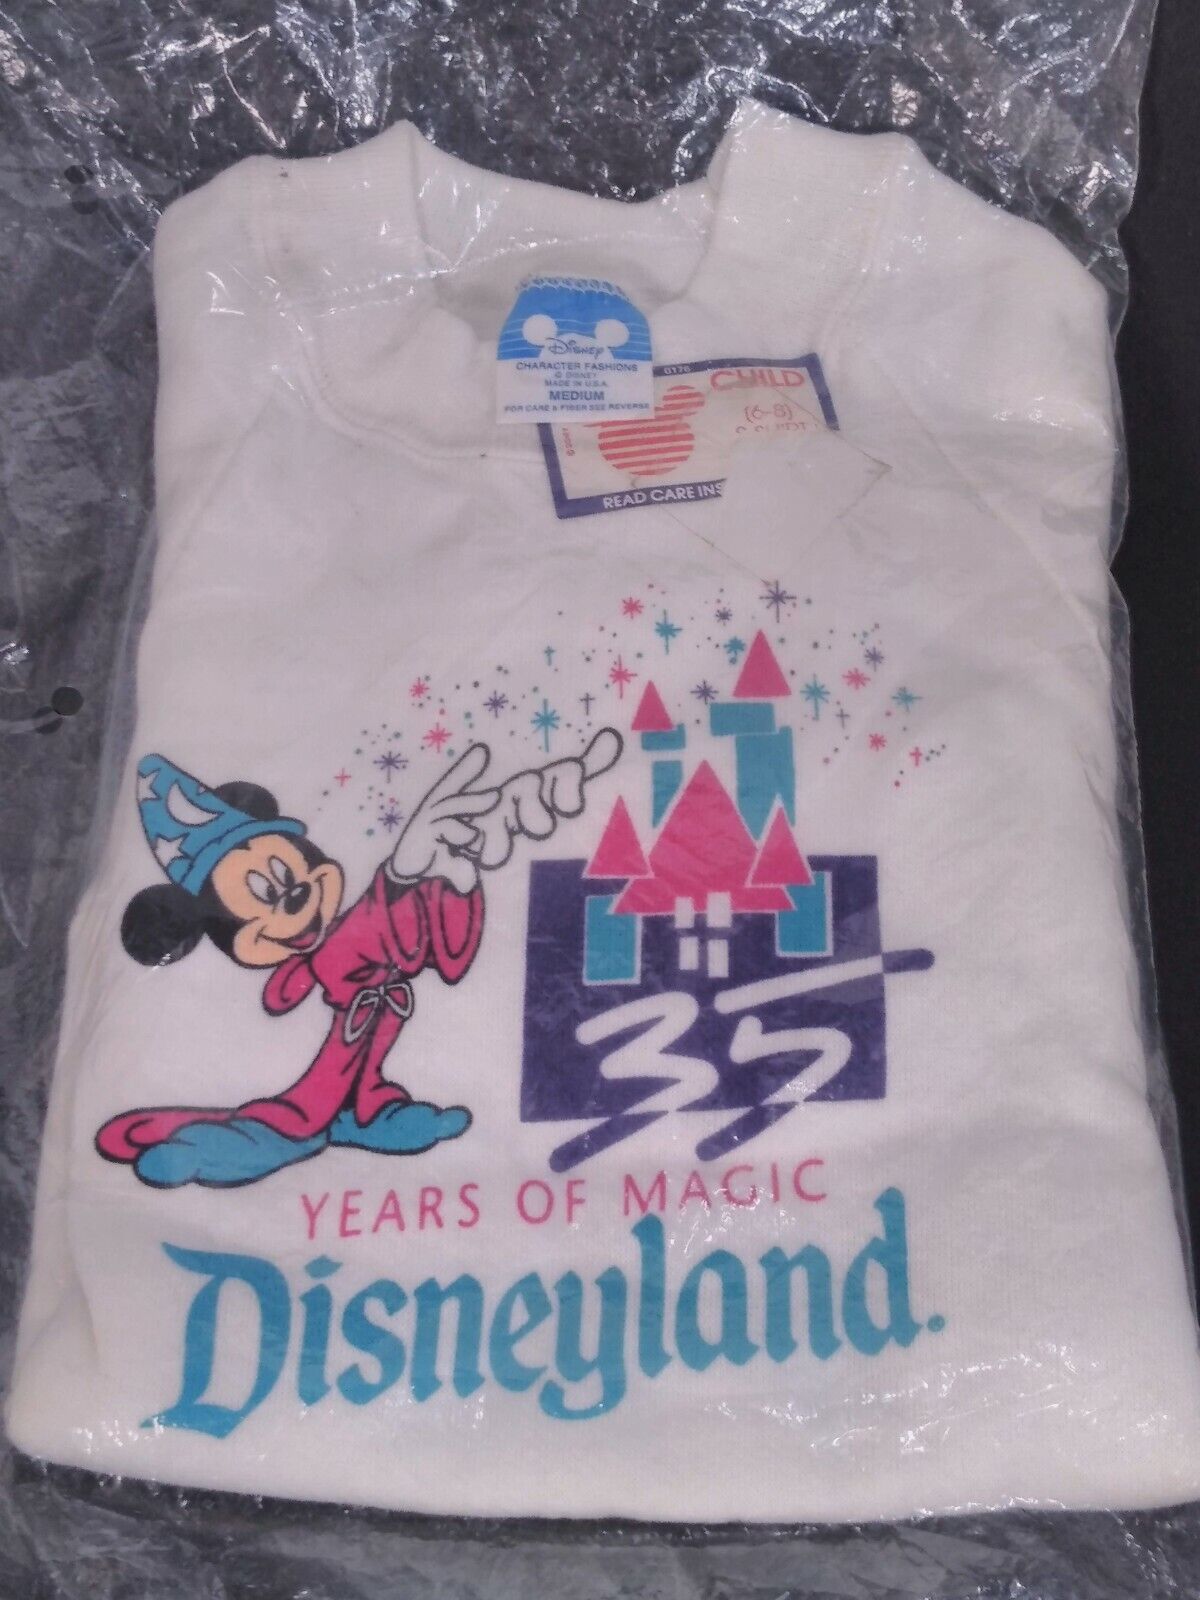 Disneyland 35 Years Of Magic Vintage Crewneck Sweatshirt NEW in pkg Size 8 child